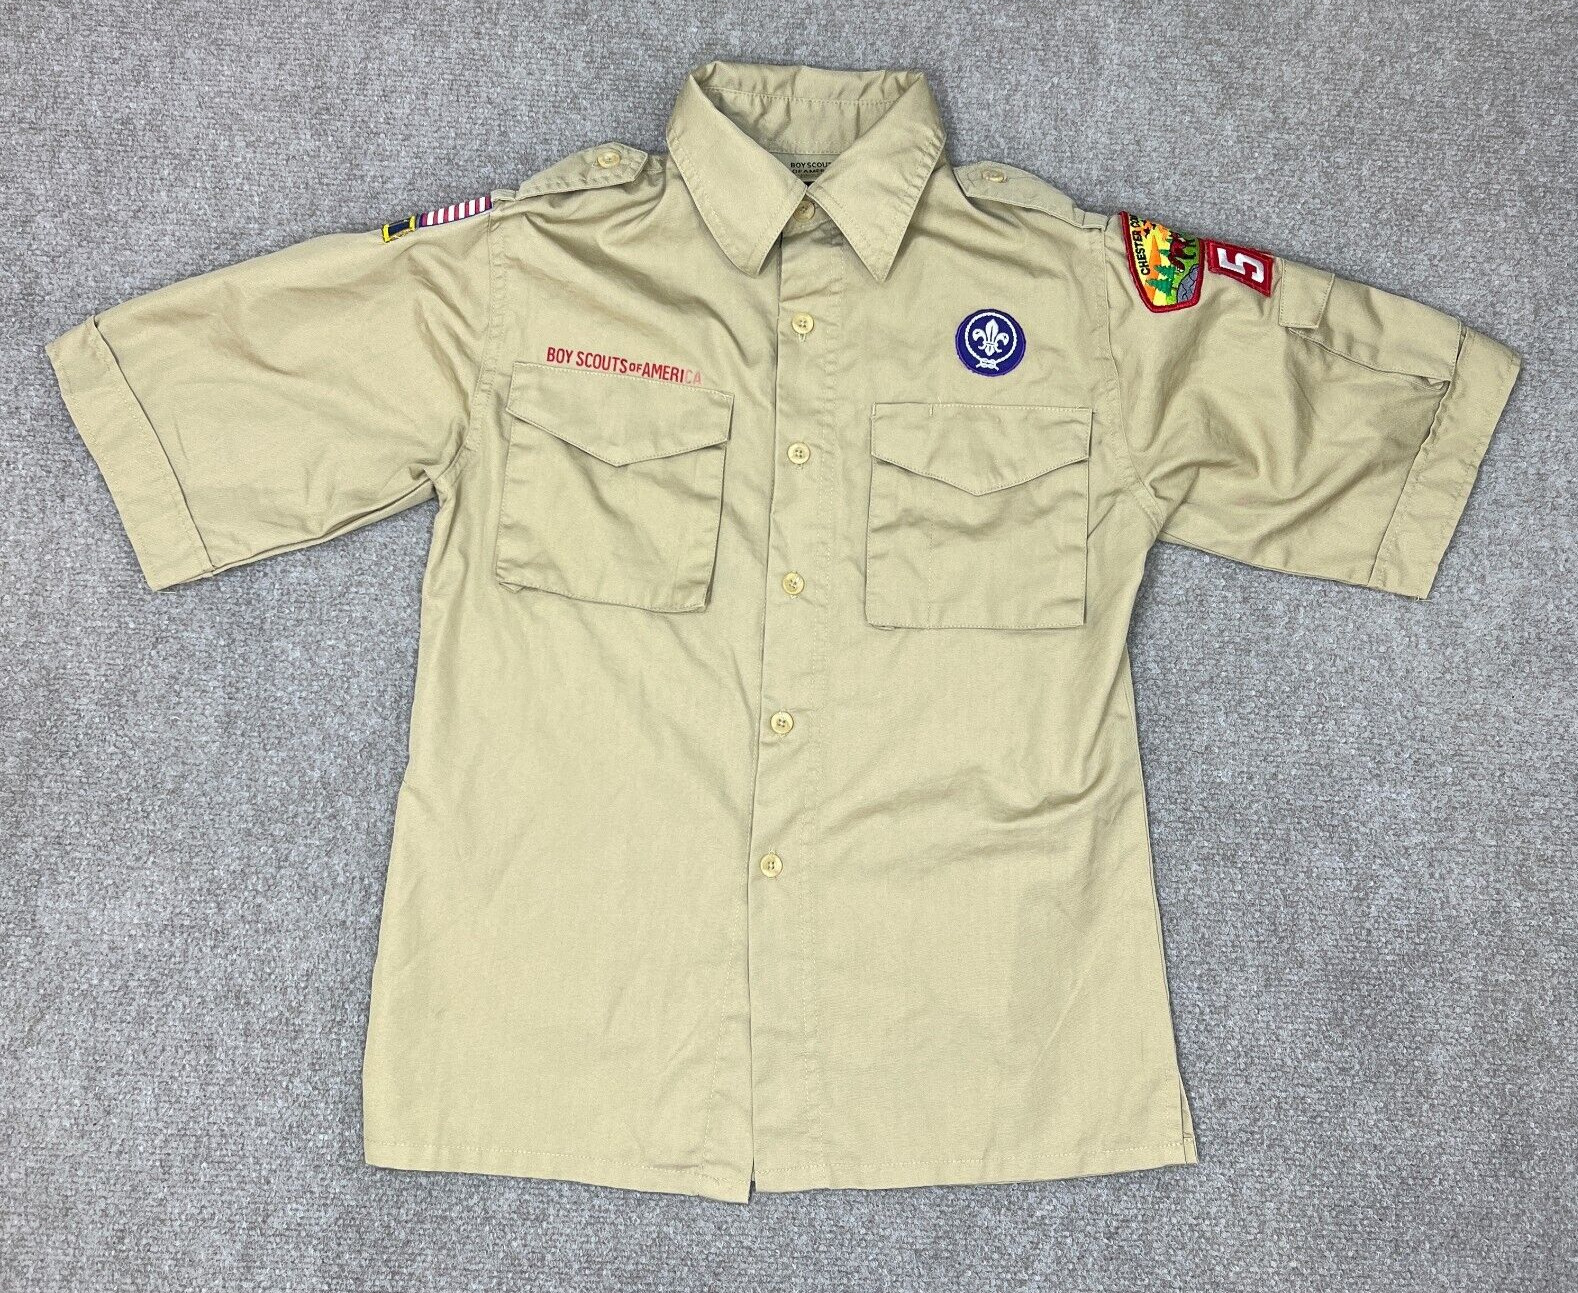 Boy Scouts Shirt Boys BSA Uniform Youth Medium Brown Button Up Patches Kids